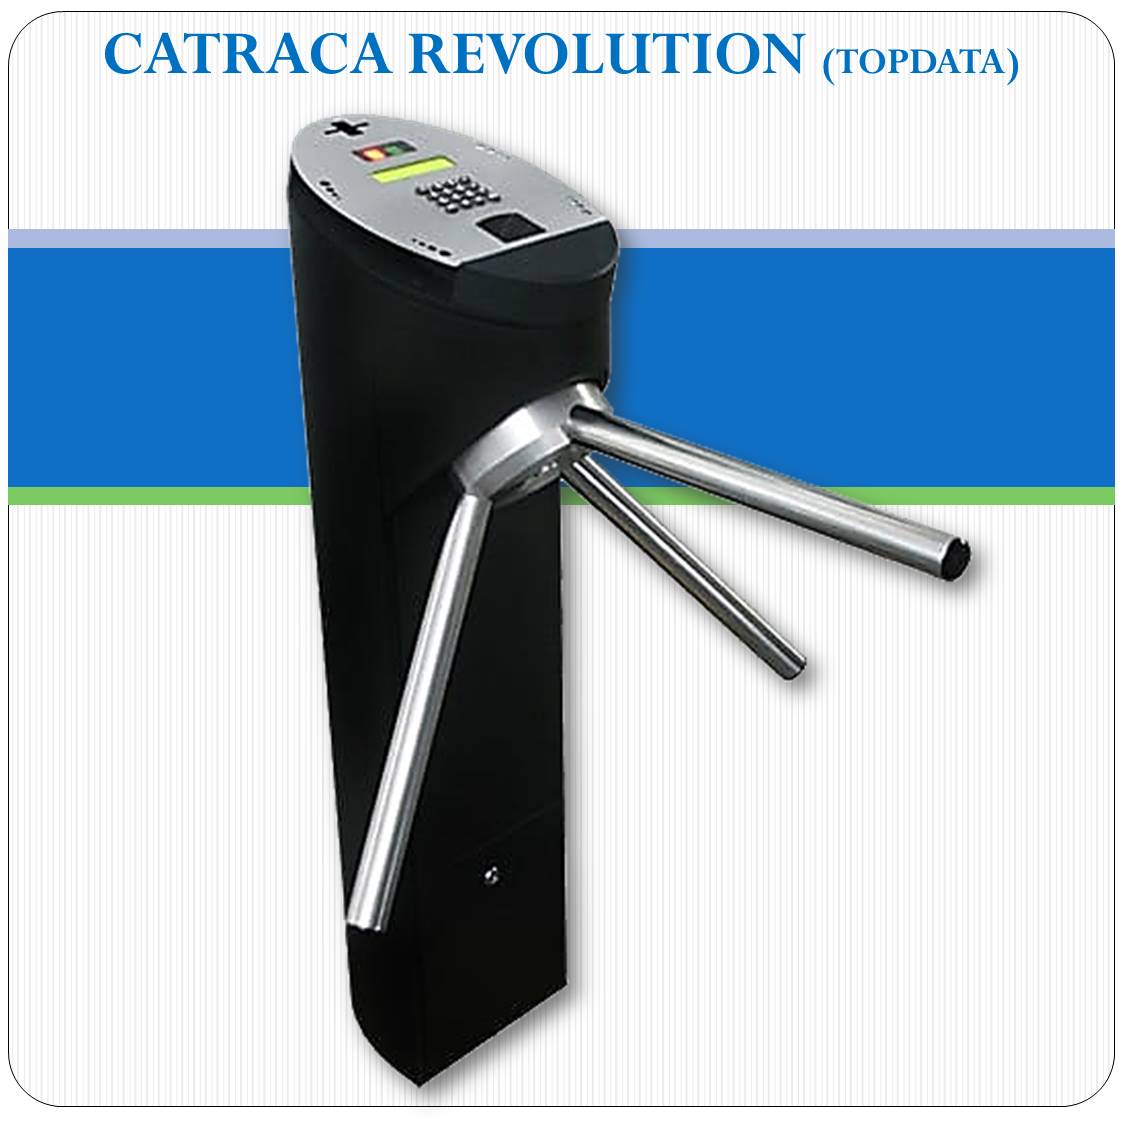 Display Big Number da Catraca Revolution - Topdata